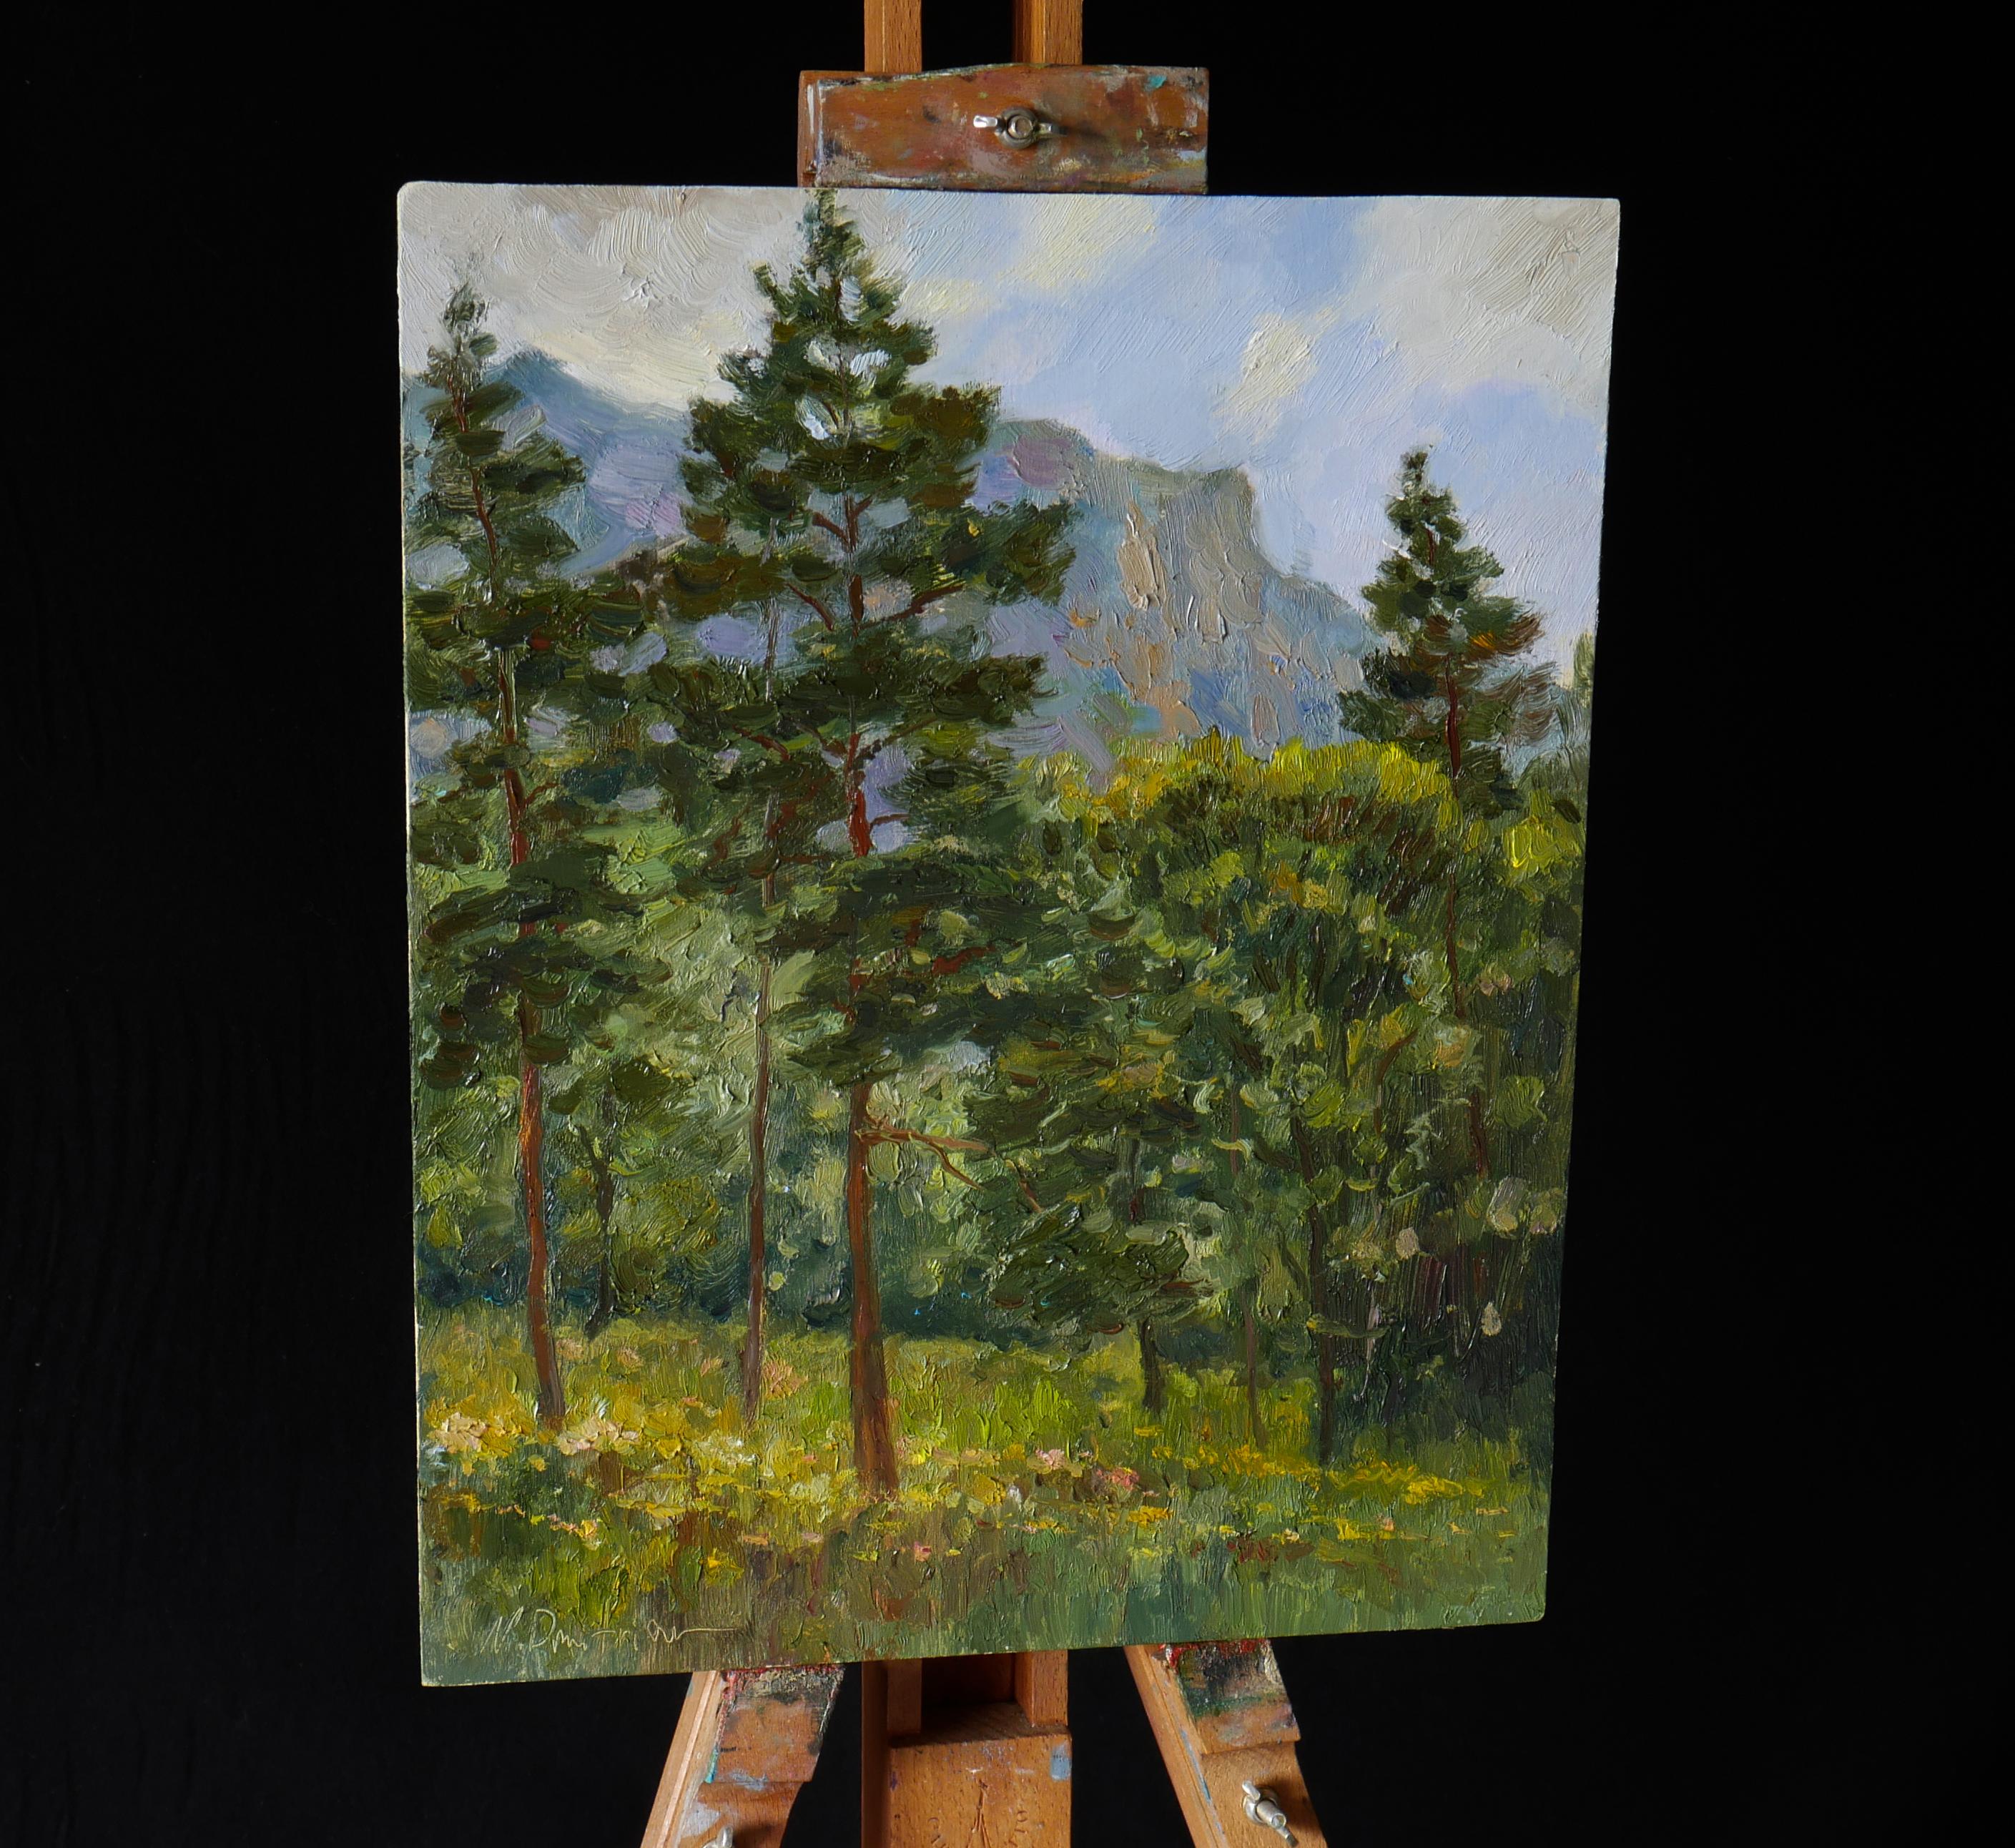 The evening in the mountains - peinture de montagne - Painting de Nikolay Dmitriev